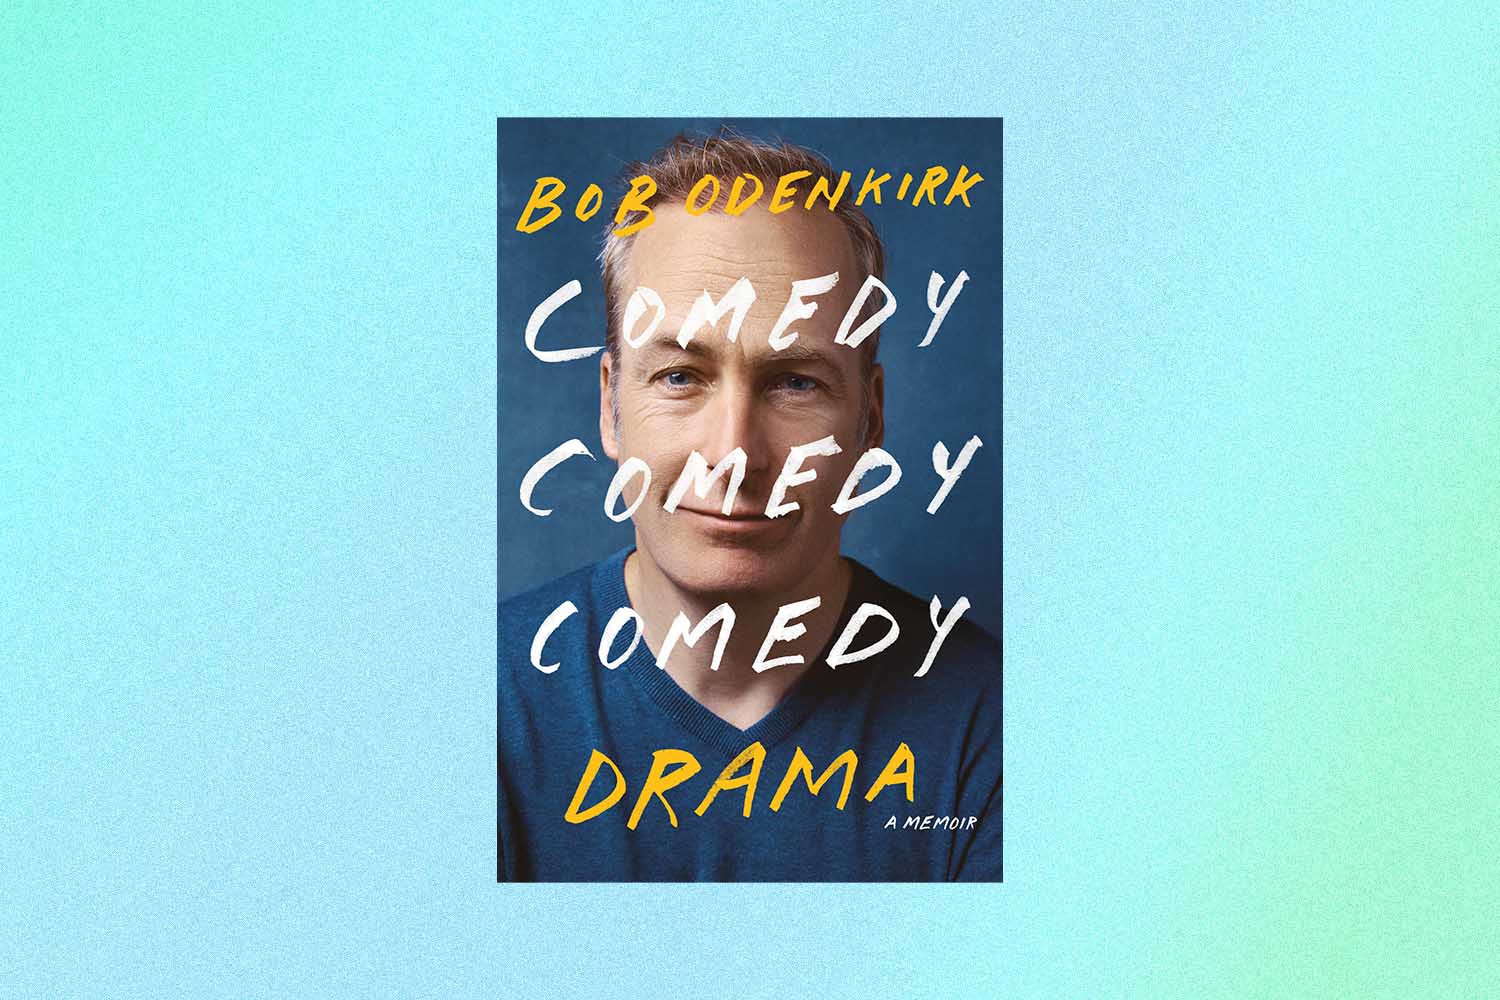 "Comedy Comedy Comedy Drama" by Bob Odenkirk